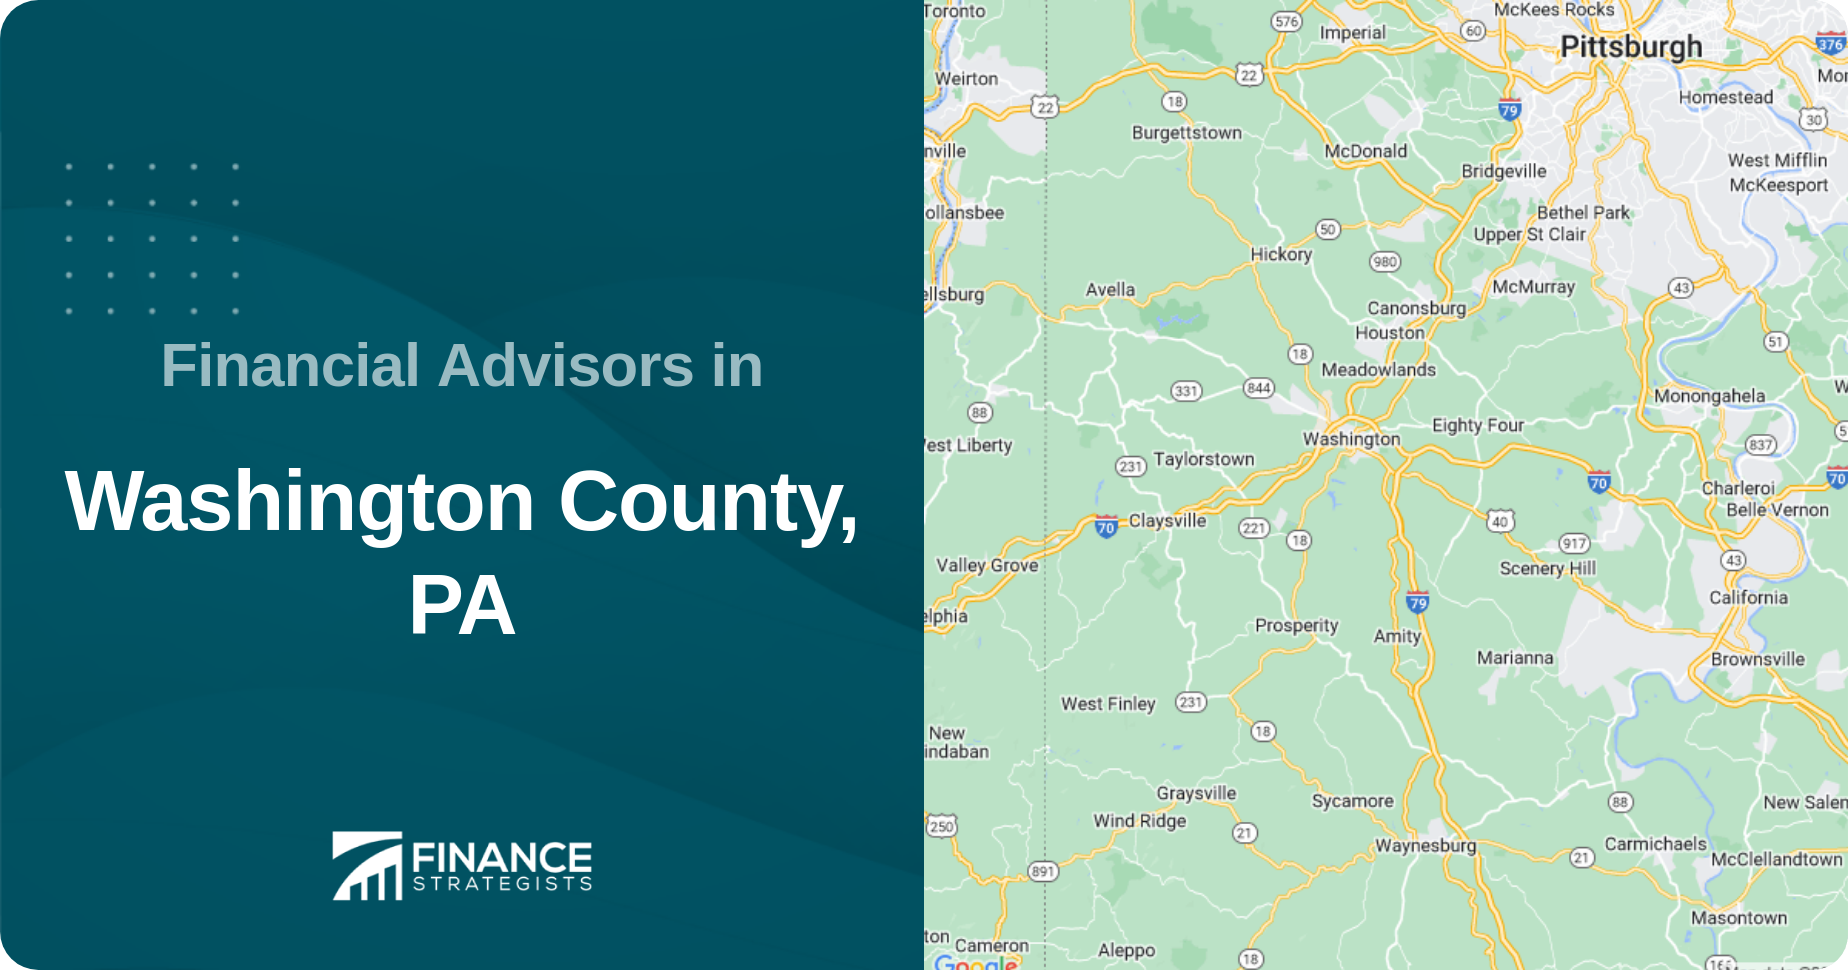 Financial Advisors in Washington County, PA